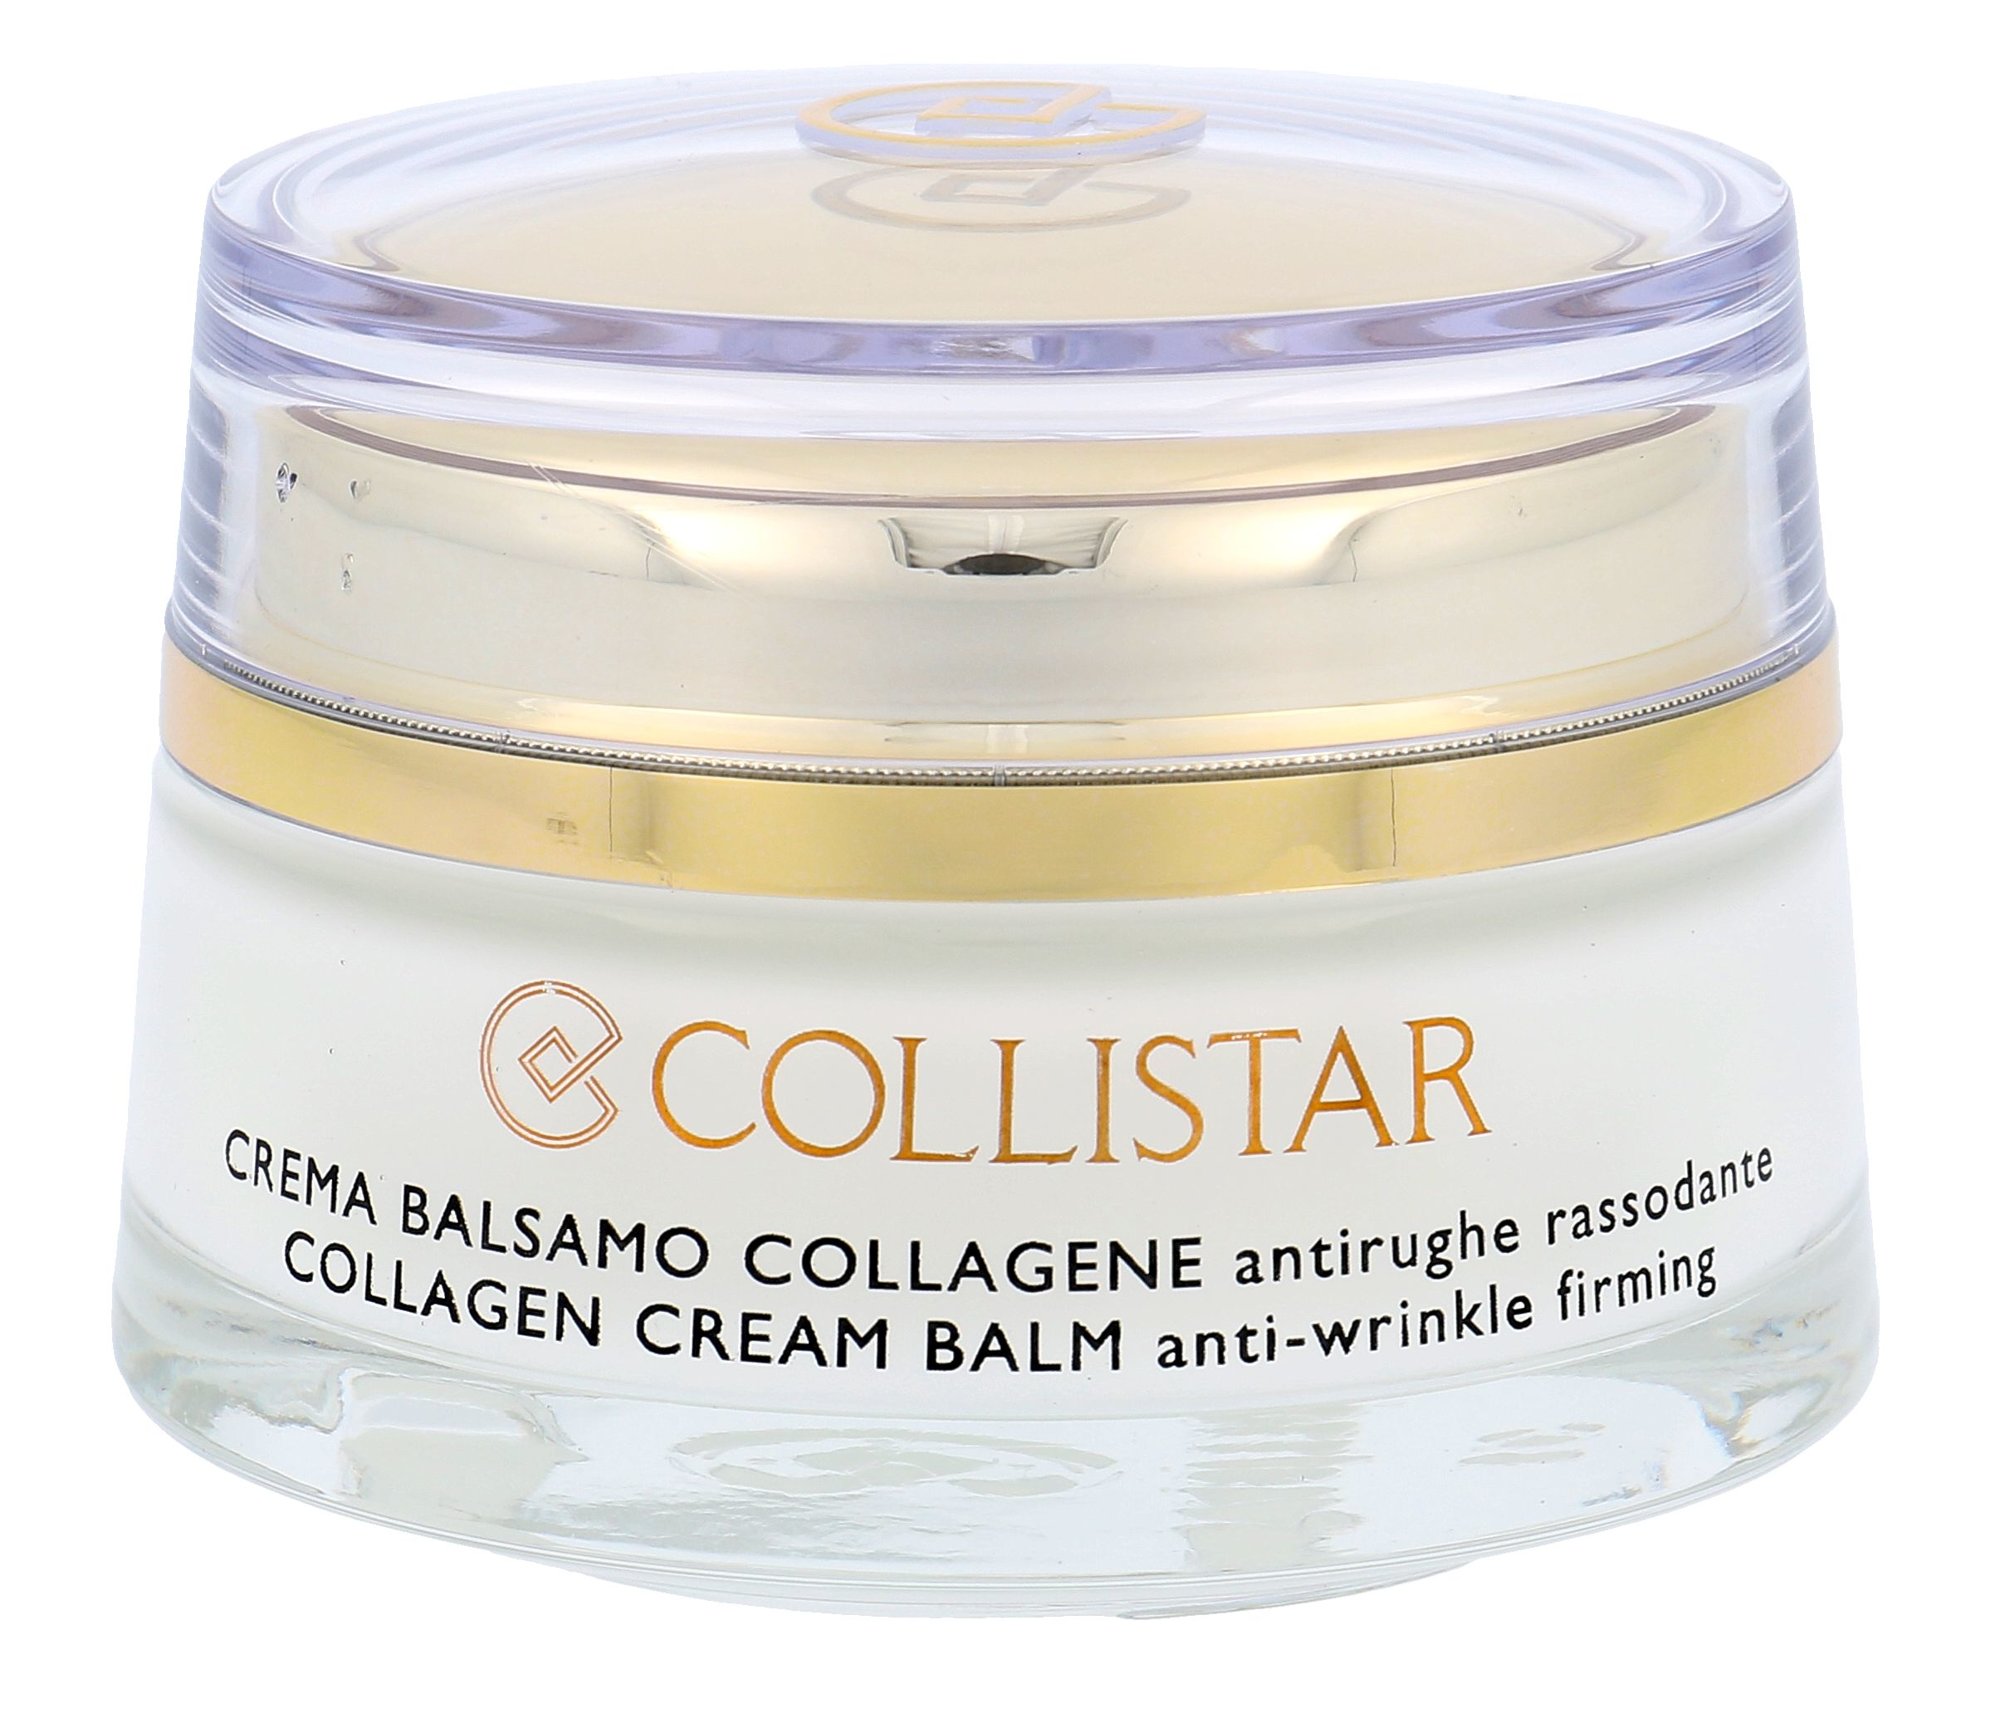 Collistar Pure Actives Collagen Cream Balm